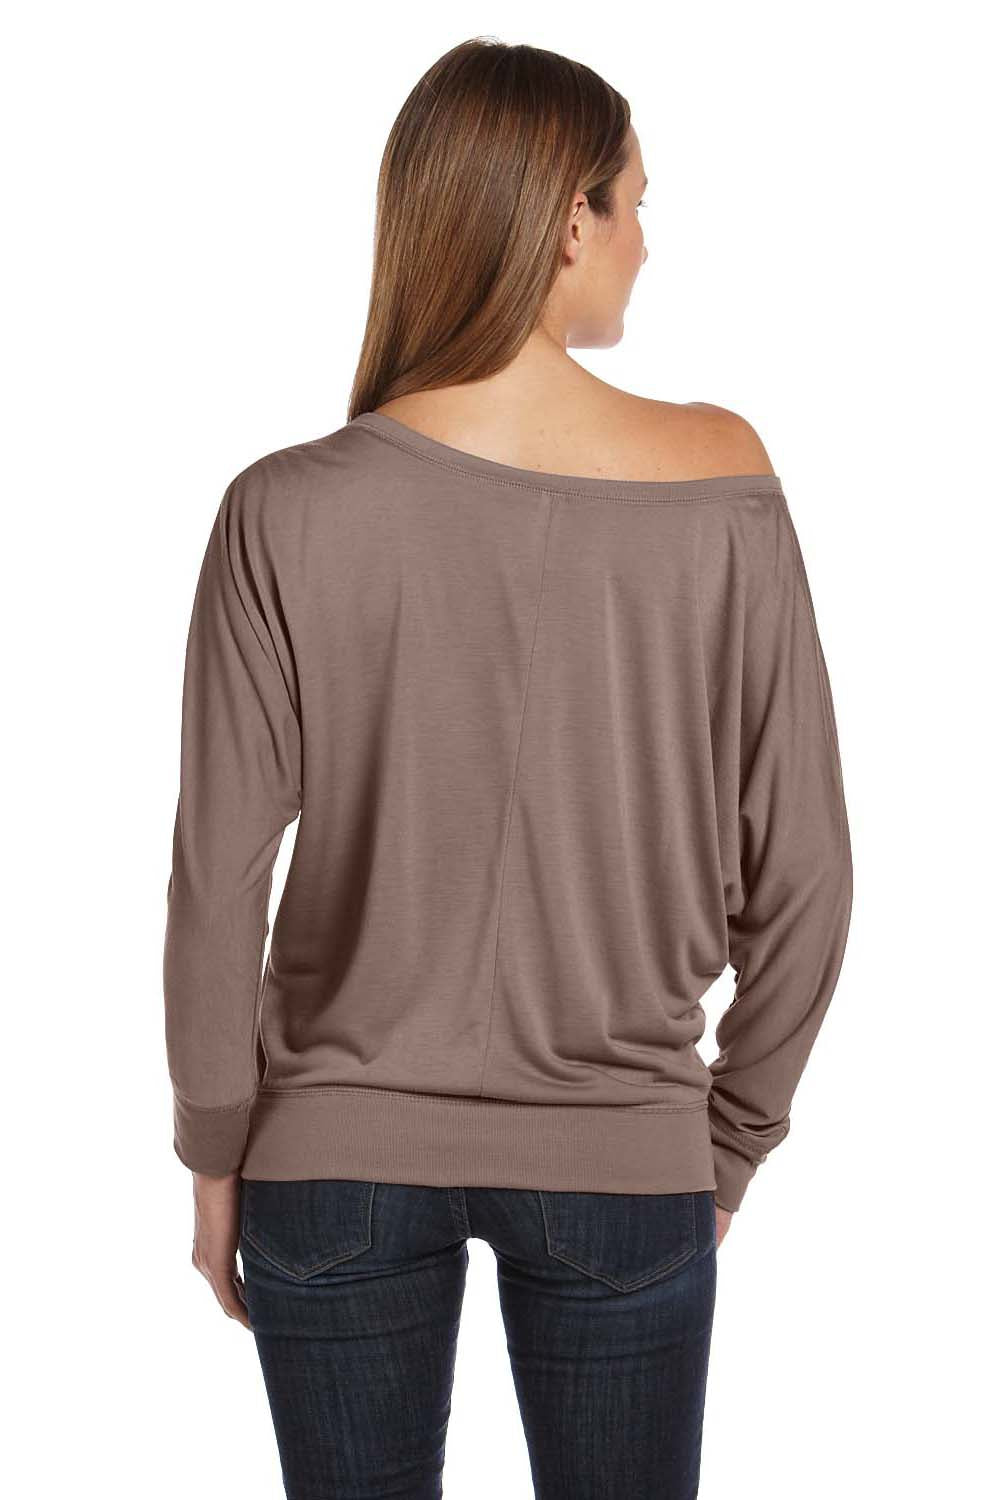 Bella + Canvas 8850 Womens Flowy Off Shoulder Long Sleeve Wide Neck T-Shirt Pebble Brown Back